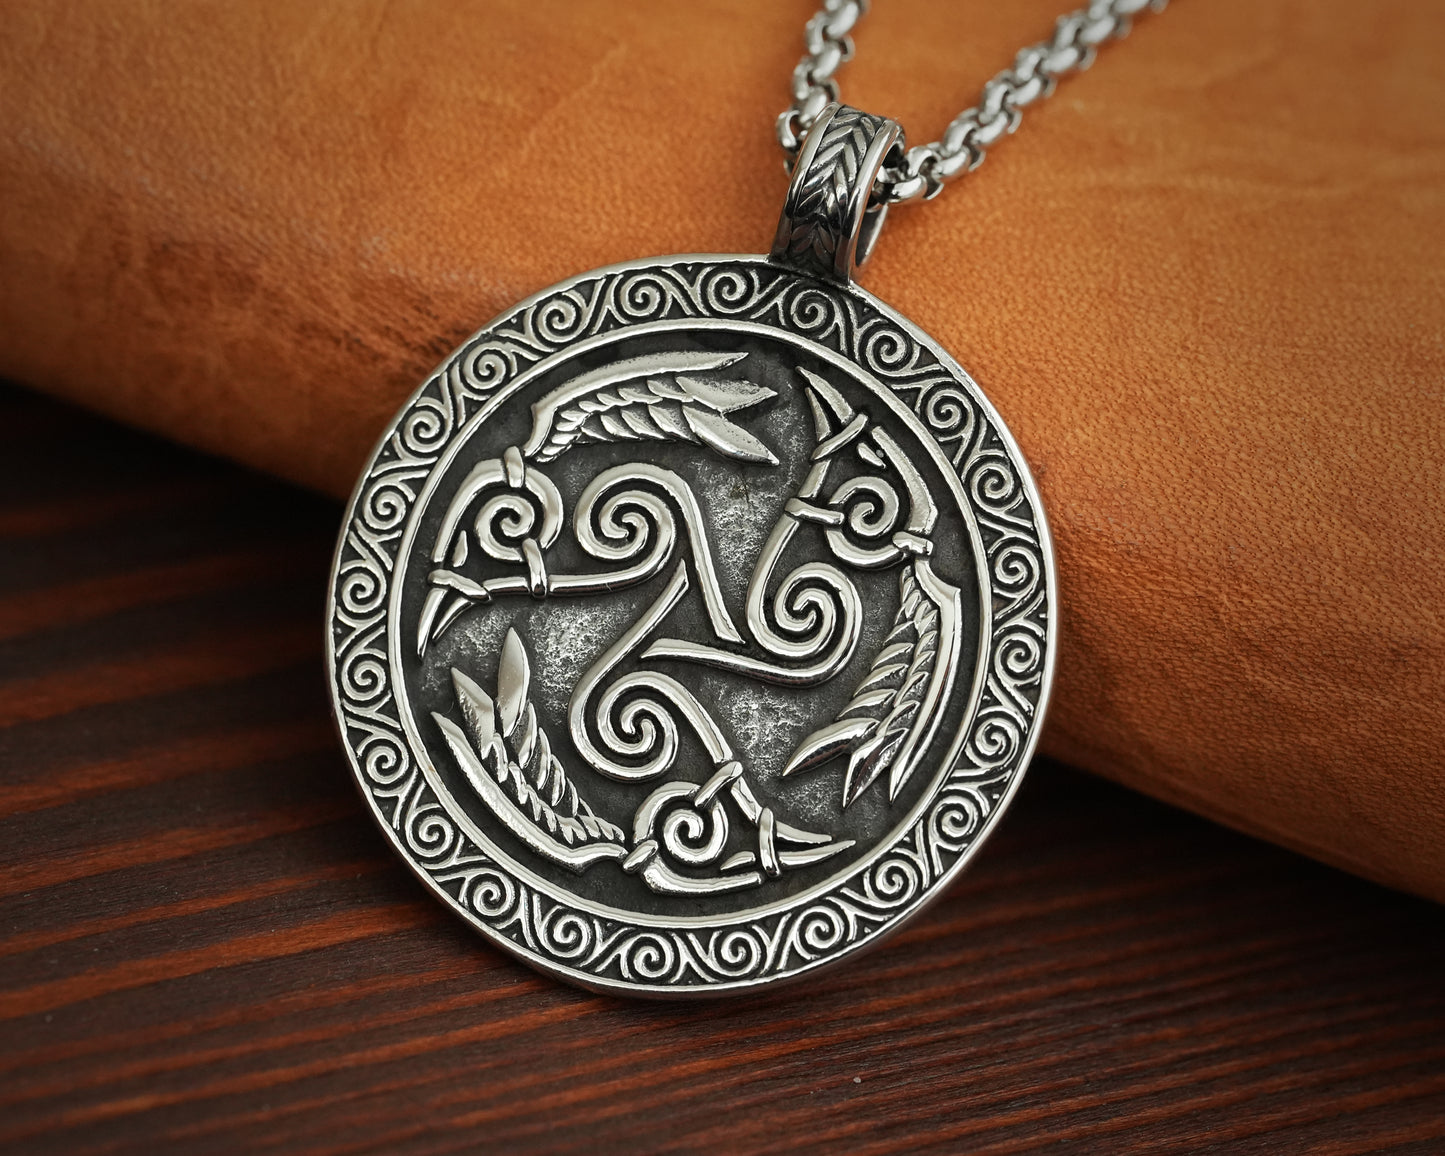 Keltische Göttin Morrigan Drei Raben Morrighan Triskelion Triskele Anhänger Halskette Charm Medaillon